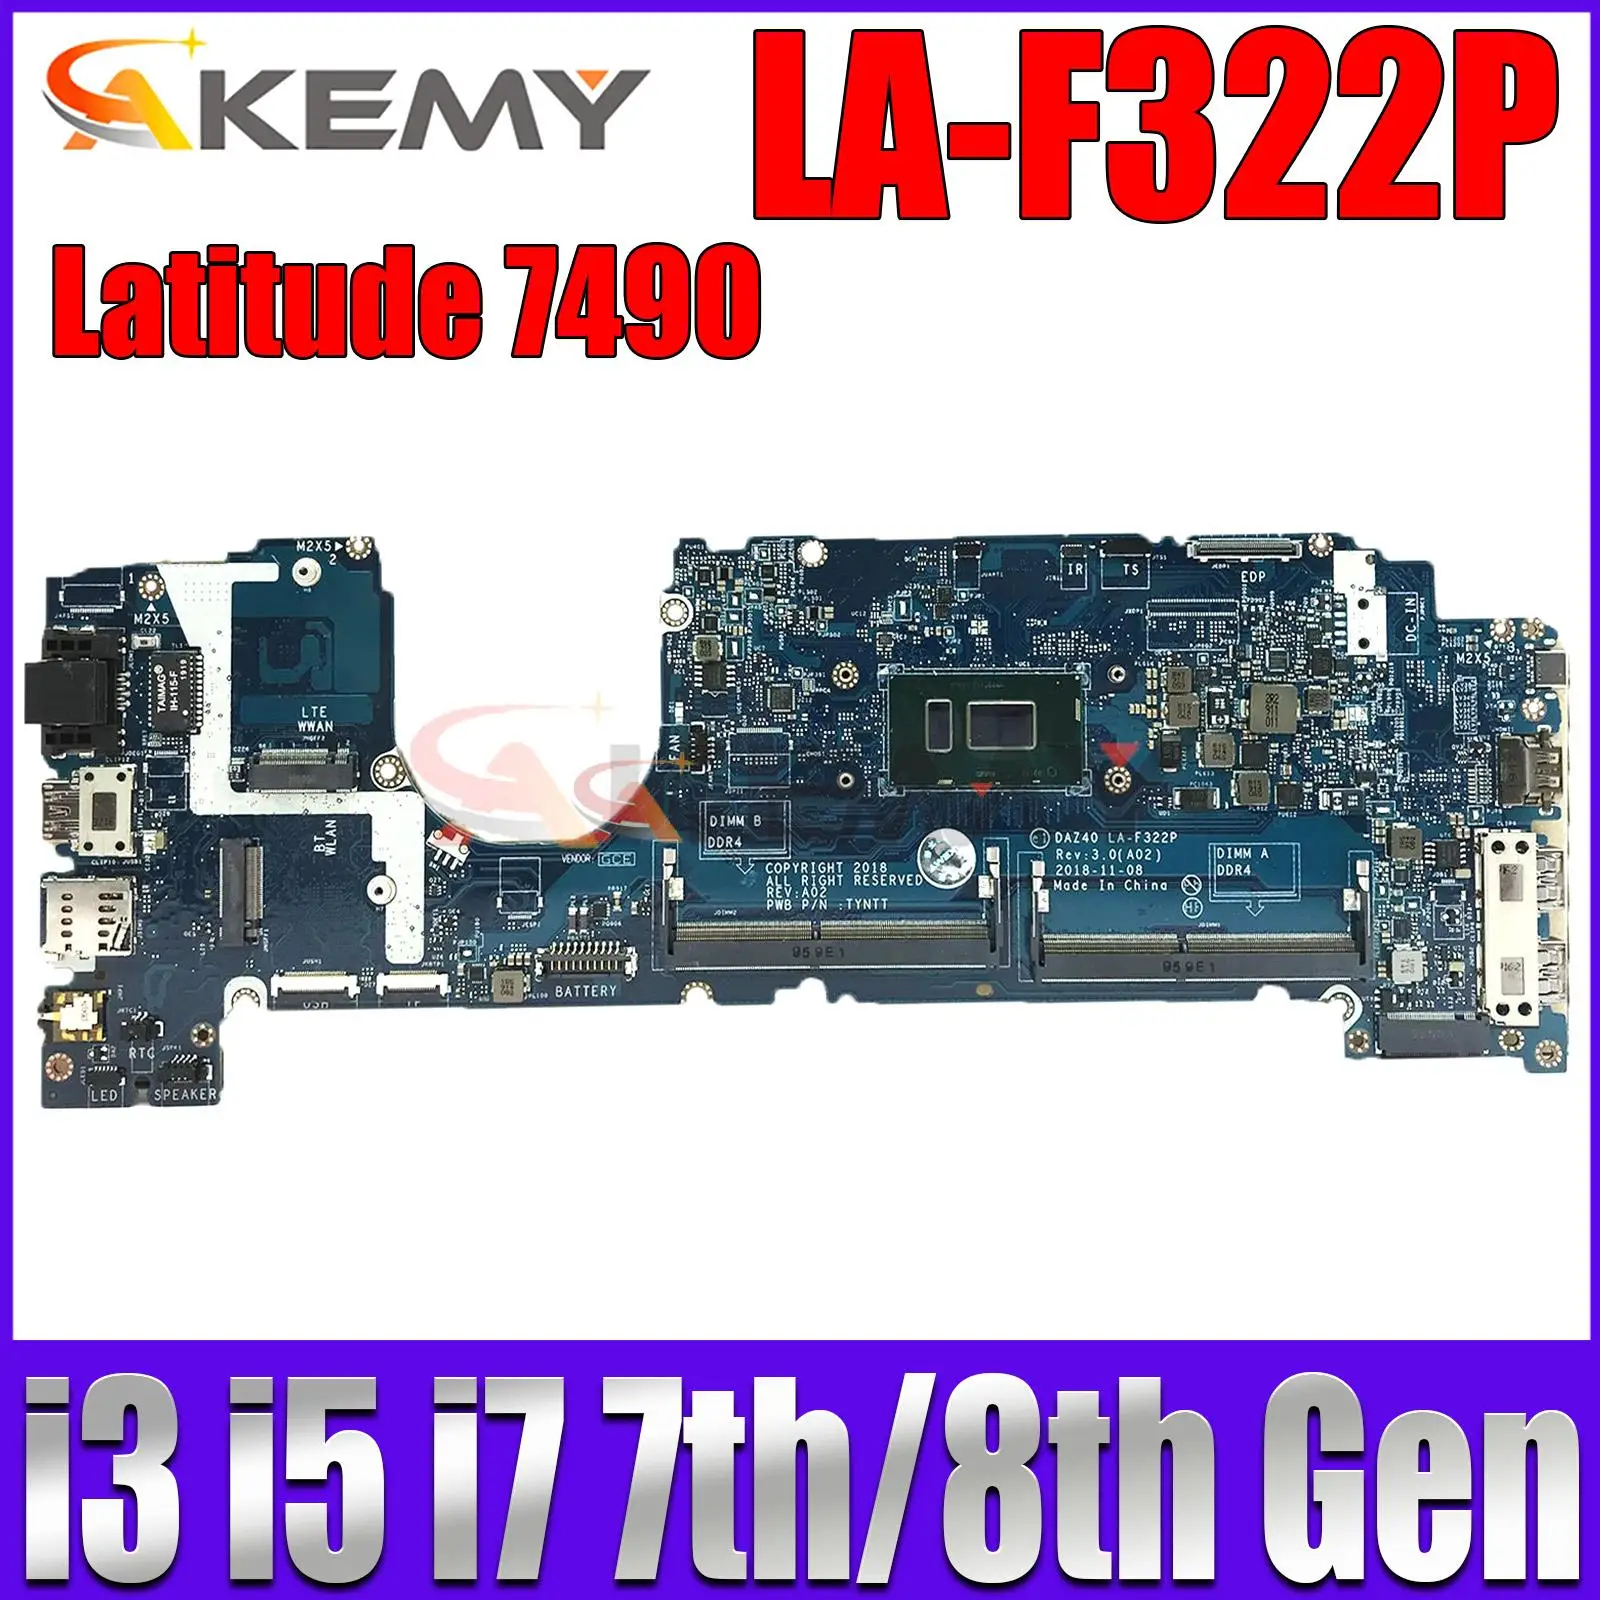 

For DELL Latitude 7490 Laptop Motherboard DAZ40 LA-F322P With i3 i5 i7 7th Gen or 8th Gen CPU CN-02YNVK 0KGYDF 0CWDR5 0PXMYG